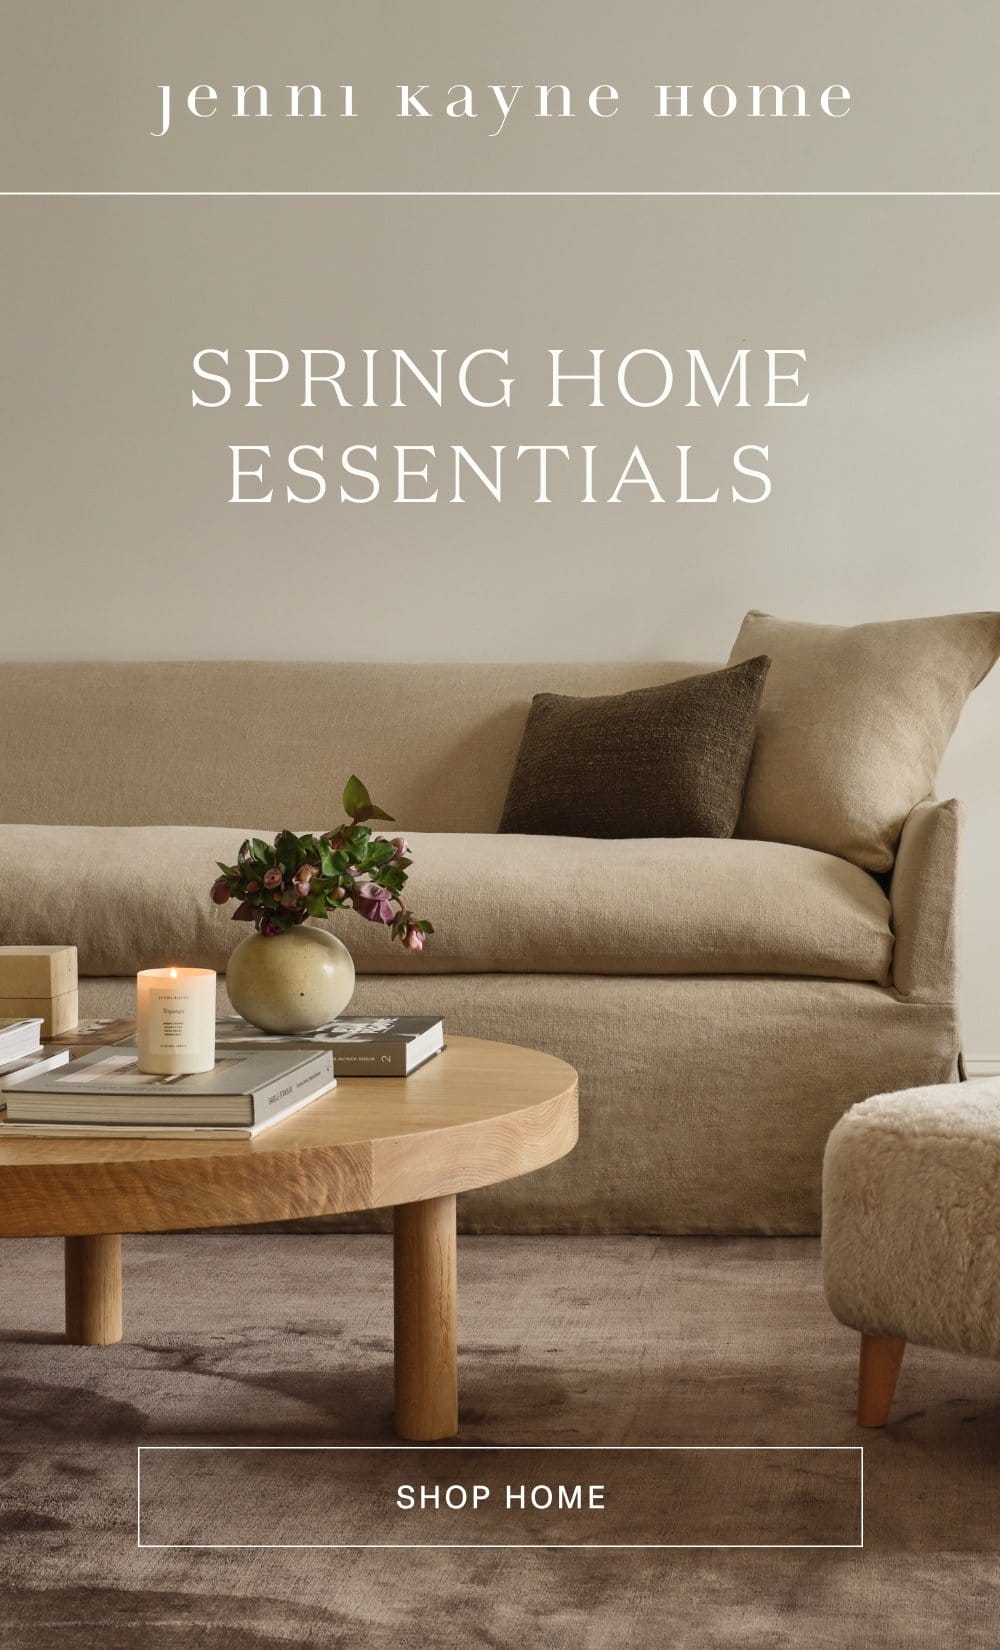 The Spring Home Essentials